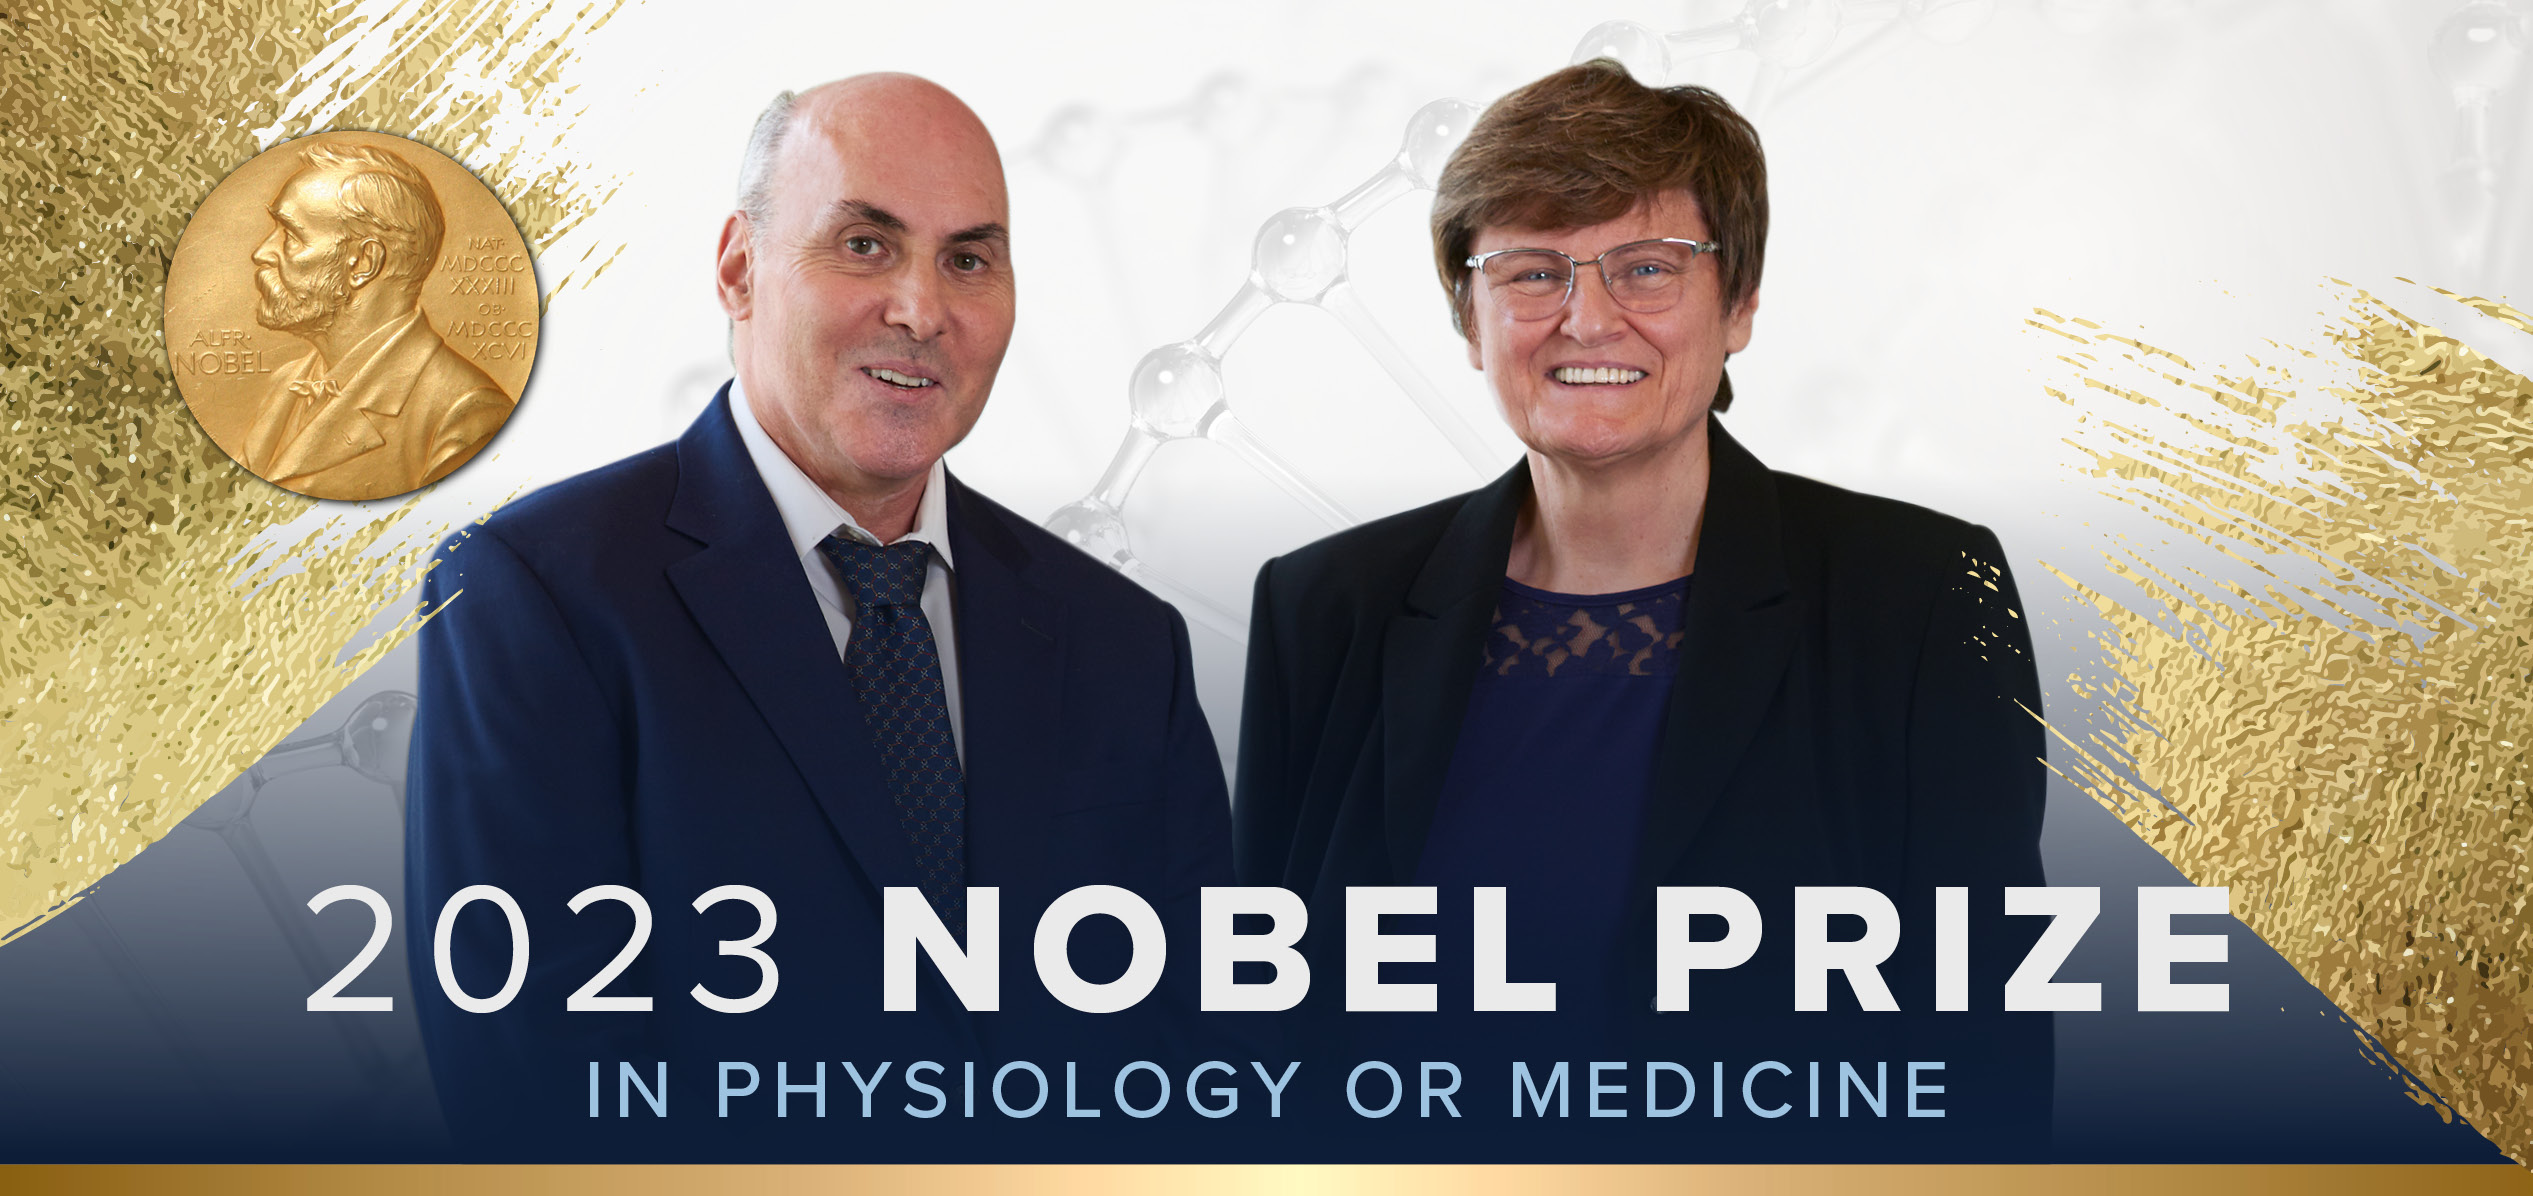 doctors Katalin Kariko and Drew Weissman - nobel prize winners